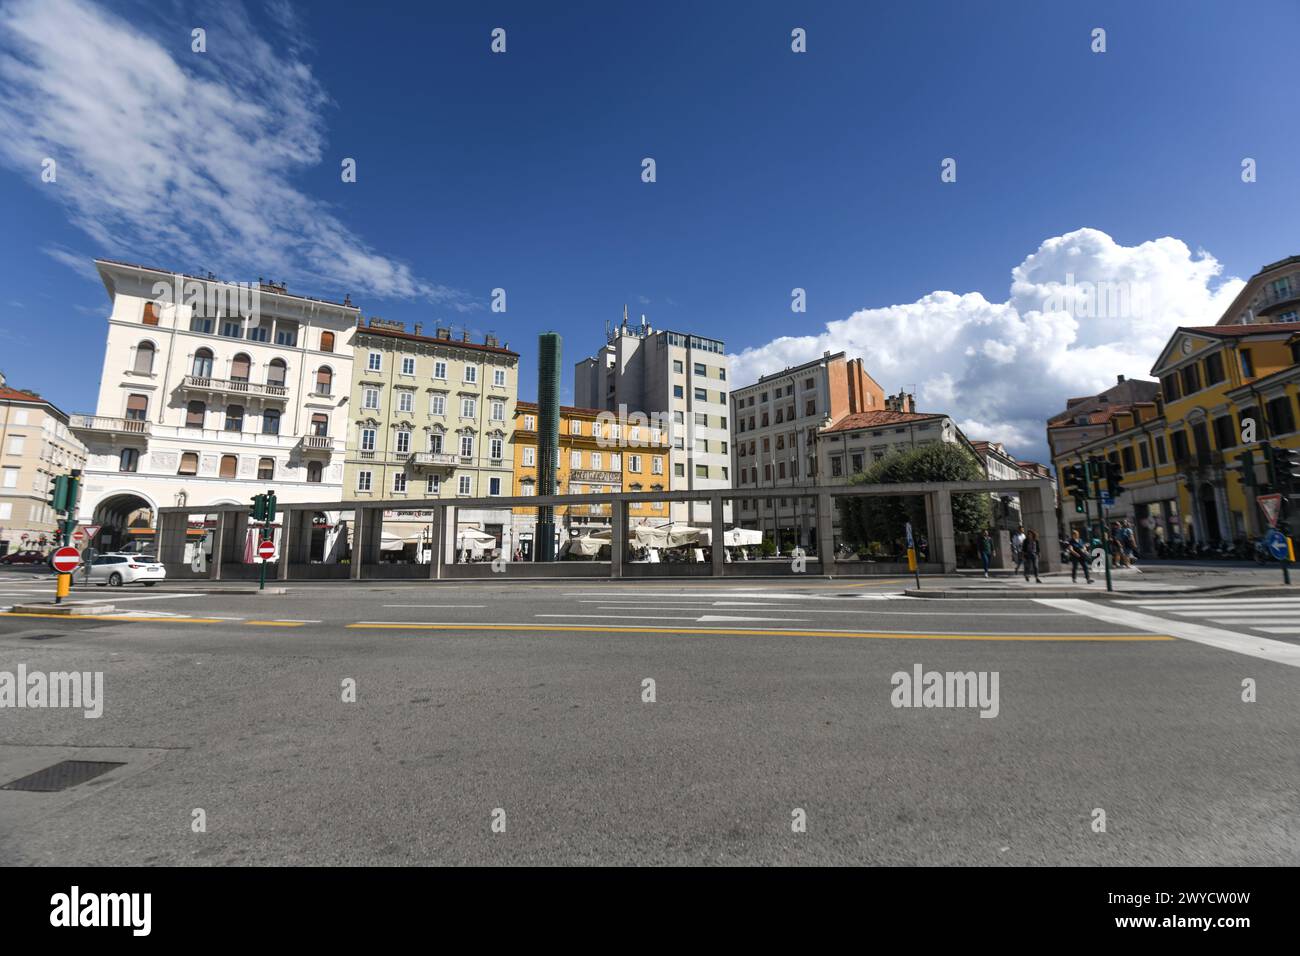 Trieste: Piazza Carlo Goldoni. Italy Stock Photo